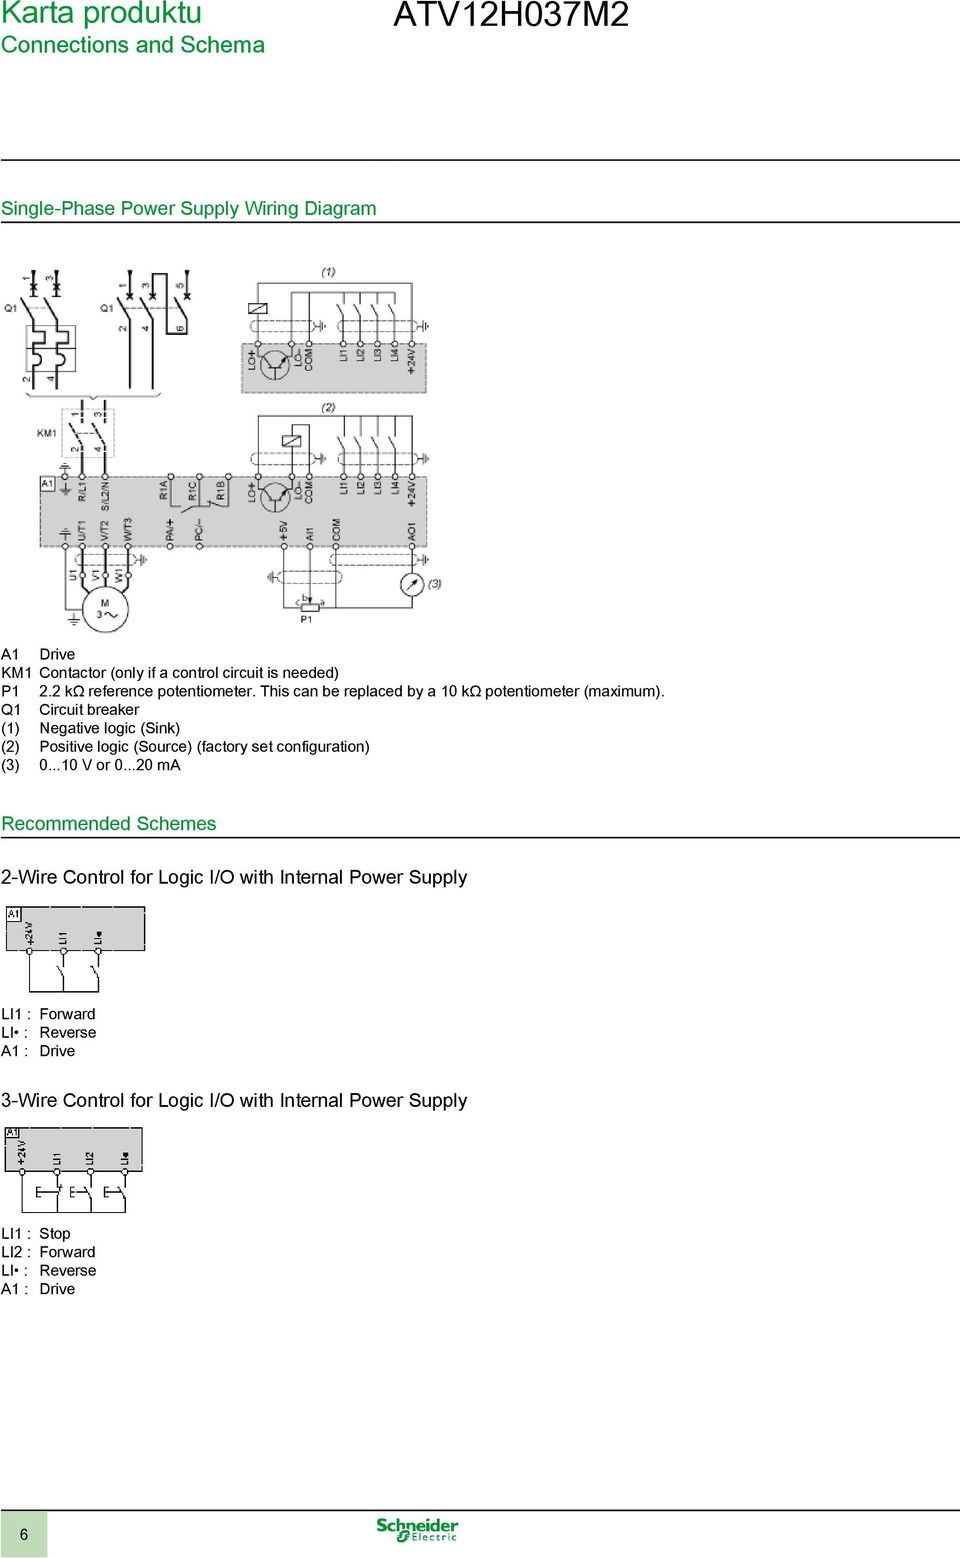 Q1 Circuit breaker (1) Negative logic (Sink) (2) Positive logic (Source) (factory set configuration) (3) 0...10 V or 0.